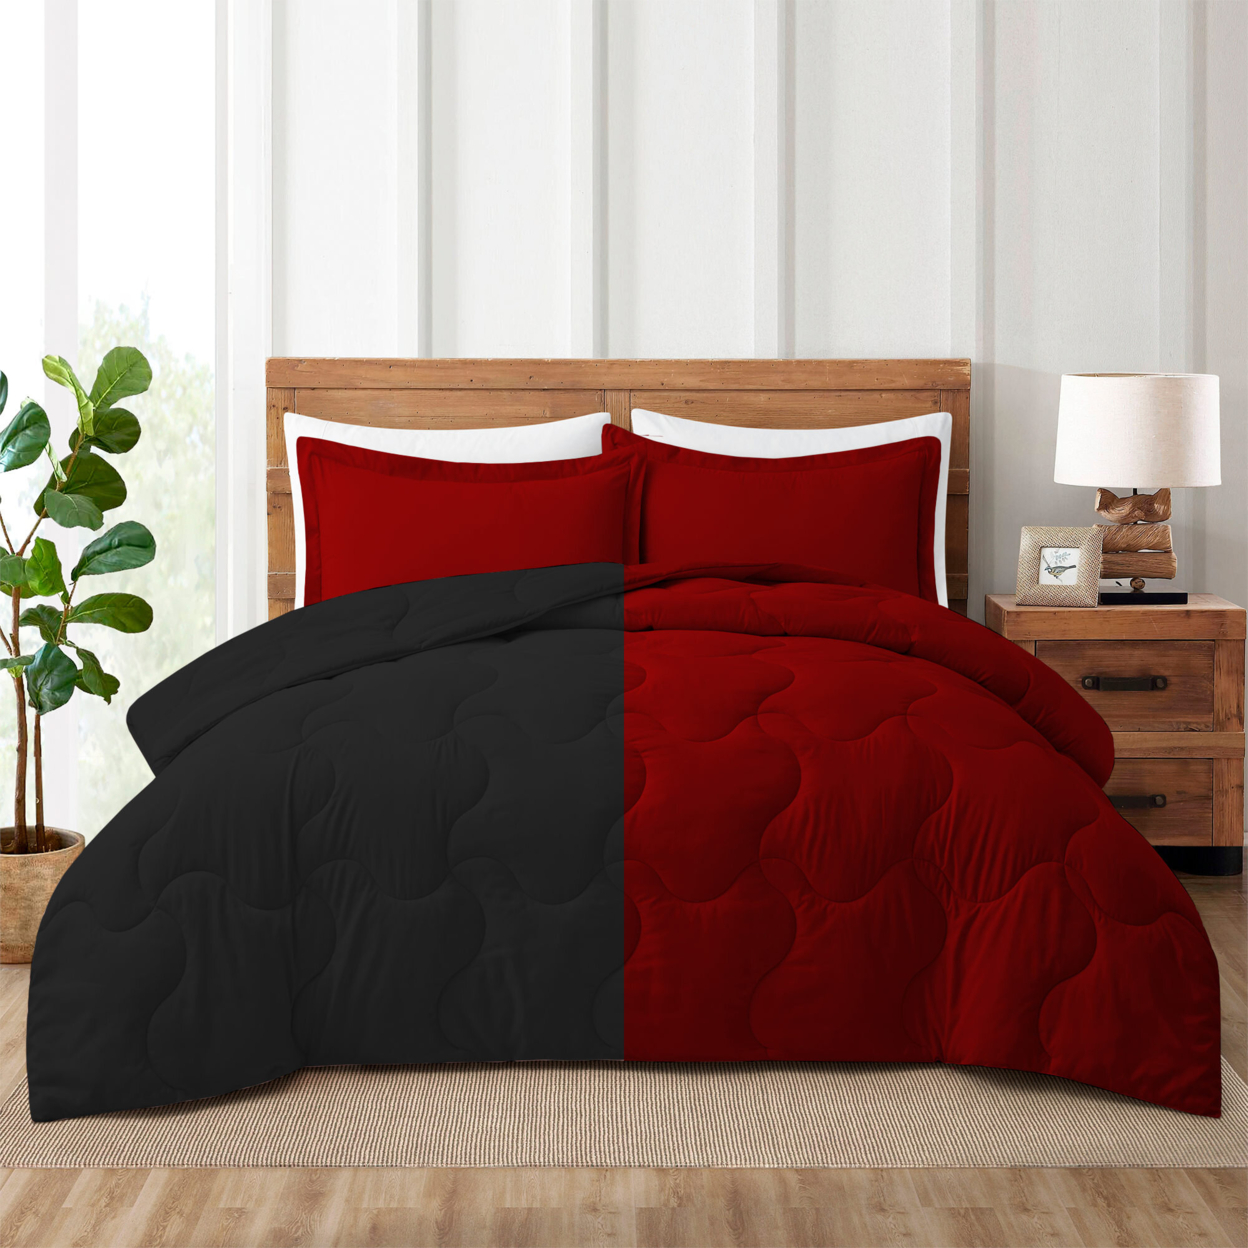 3 Or 2 Pieces Lightweight Reversible Comforter Set With Pillow Shams - Dark Grey/Light Grey, Twin